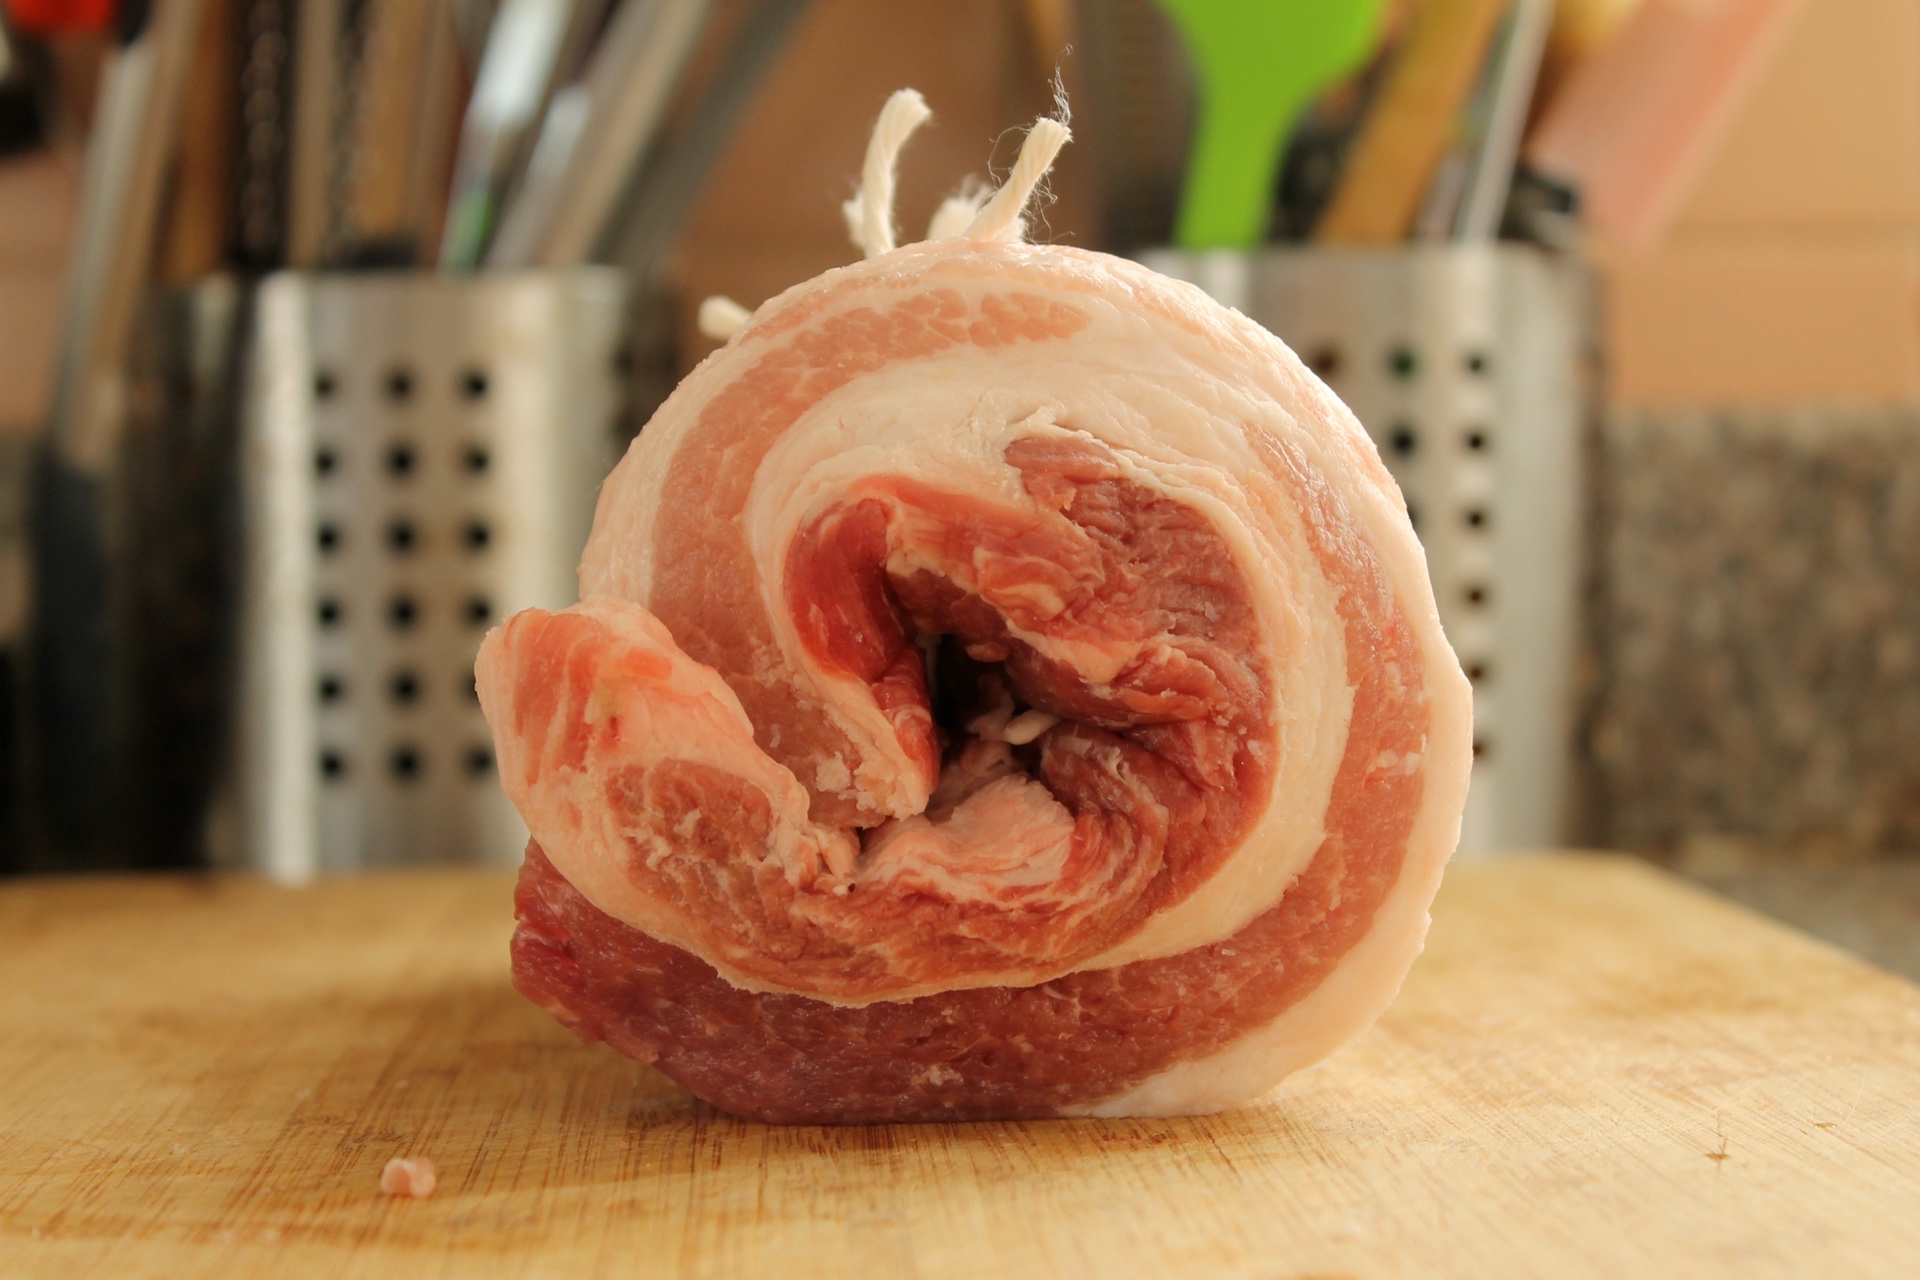 The pork belly should form a spiral.